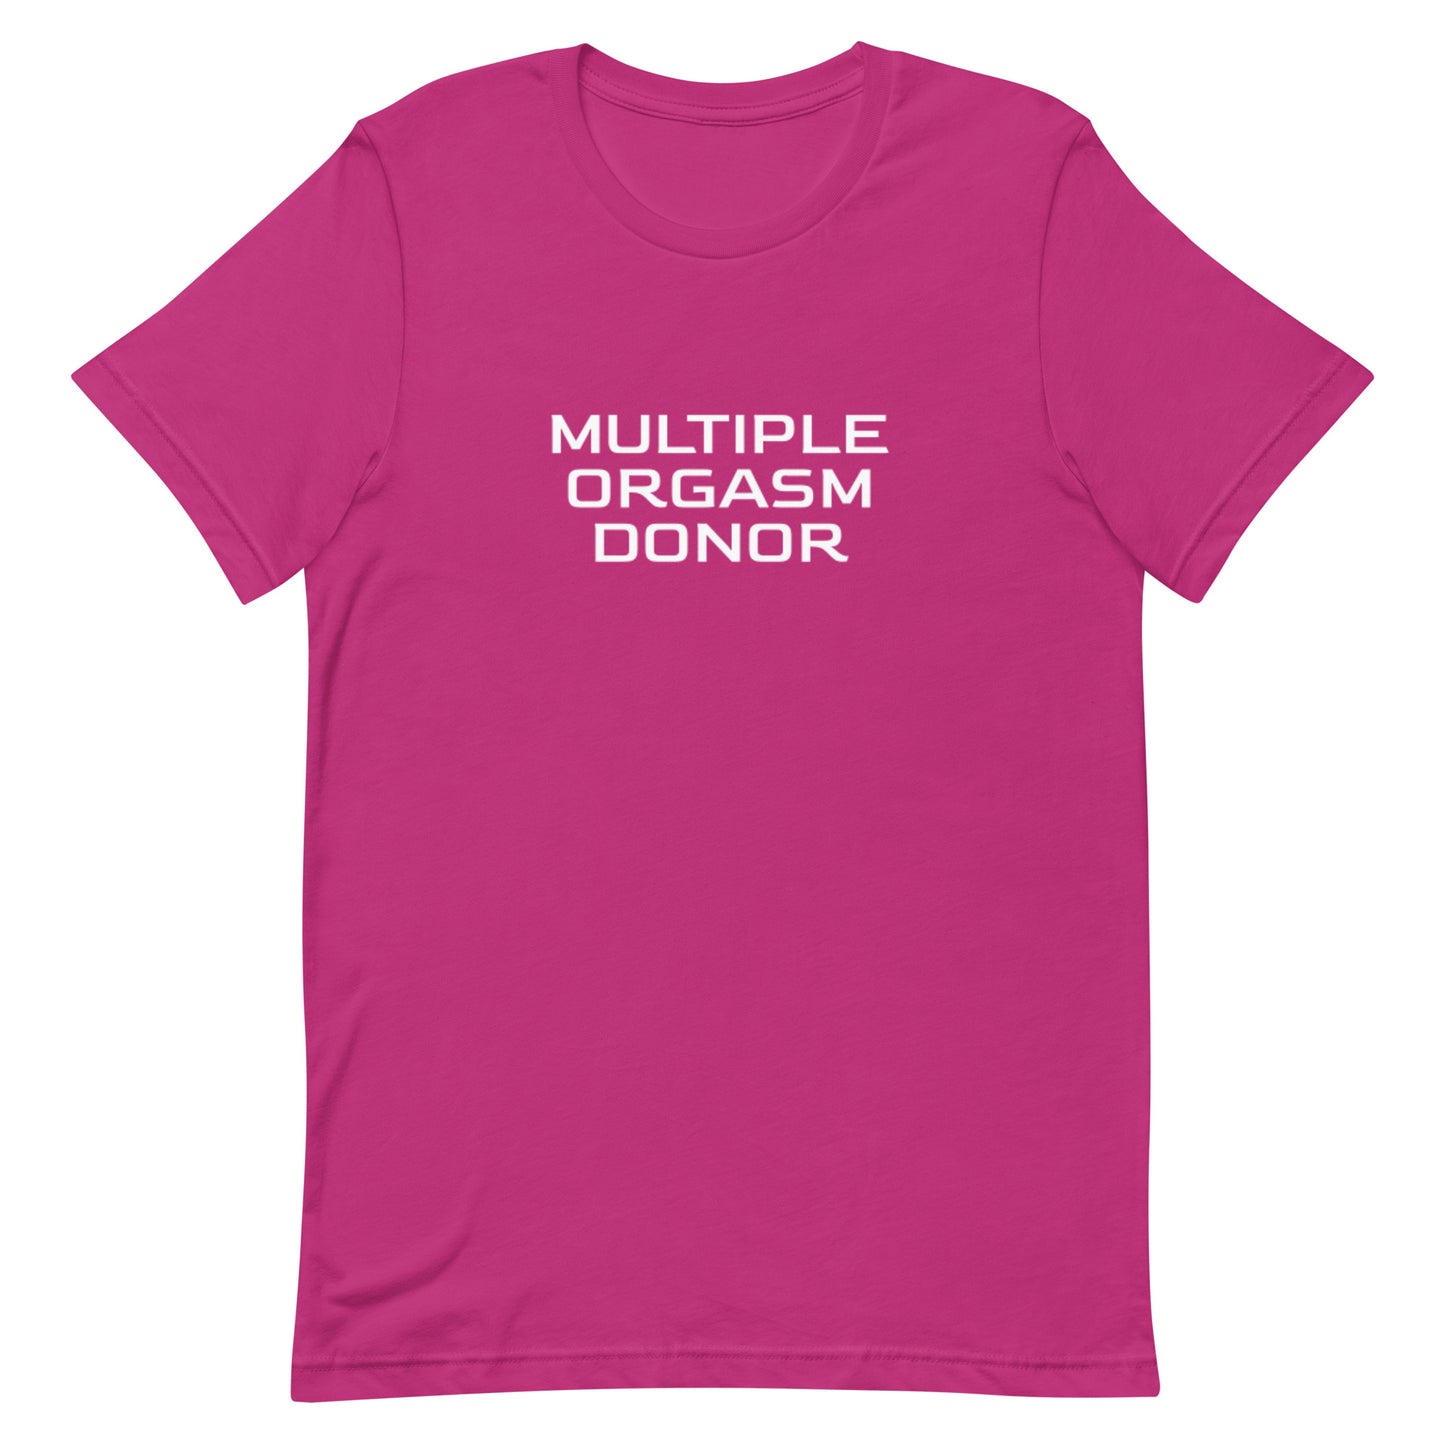 Multiple orgasm donor